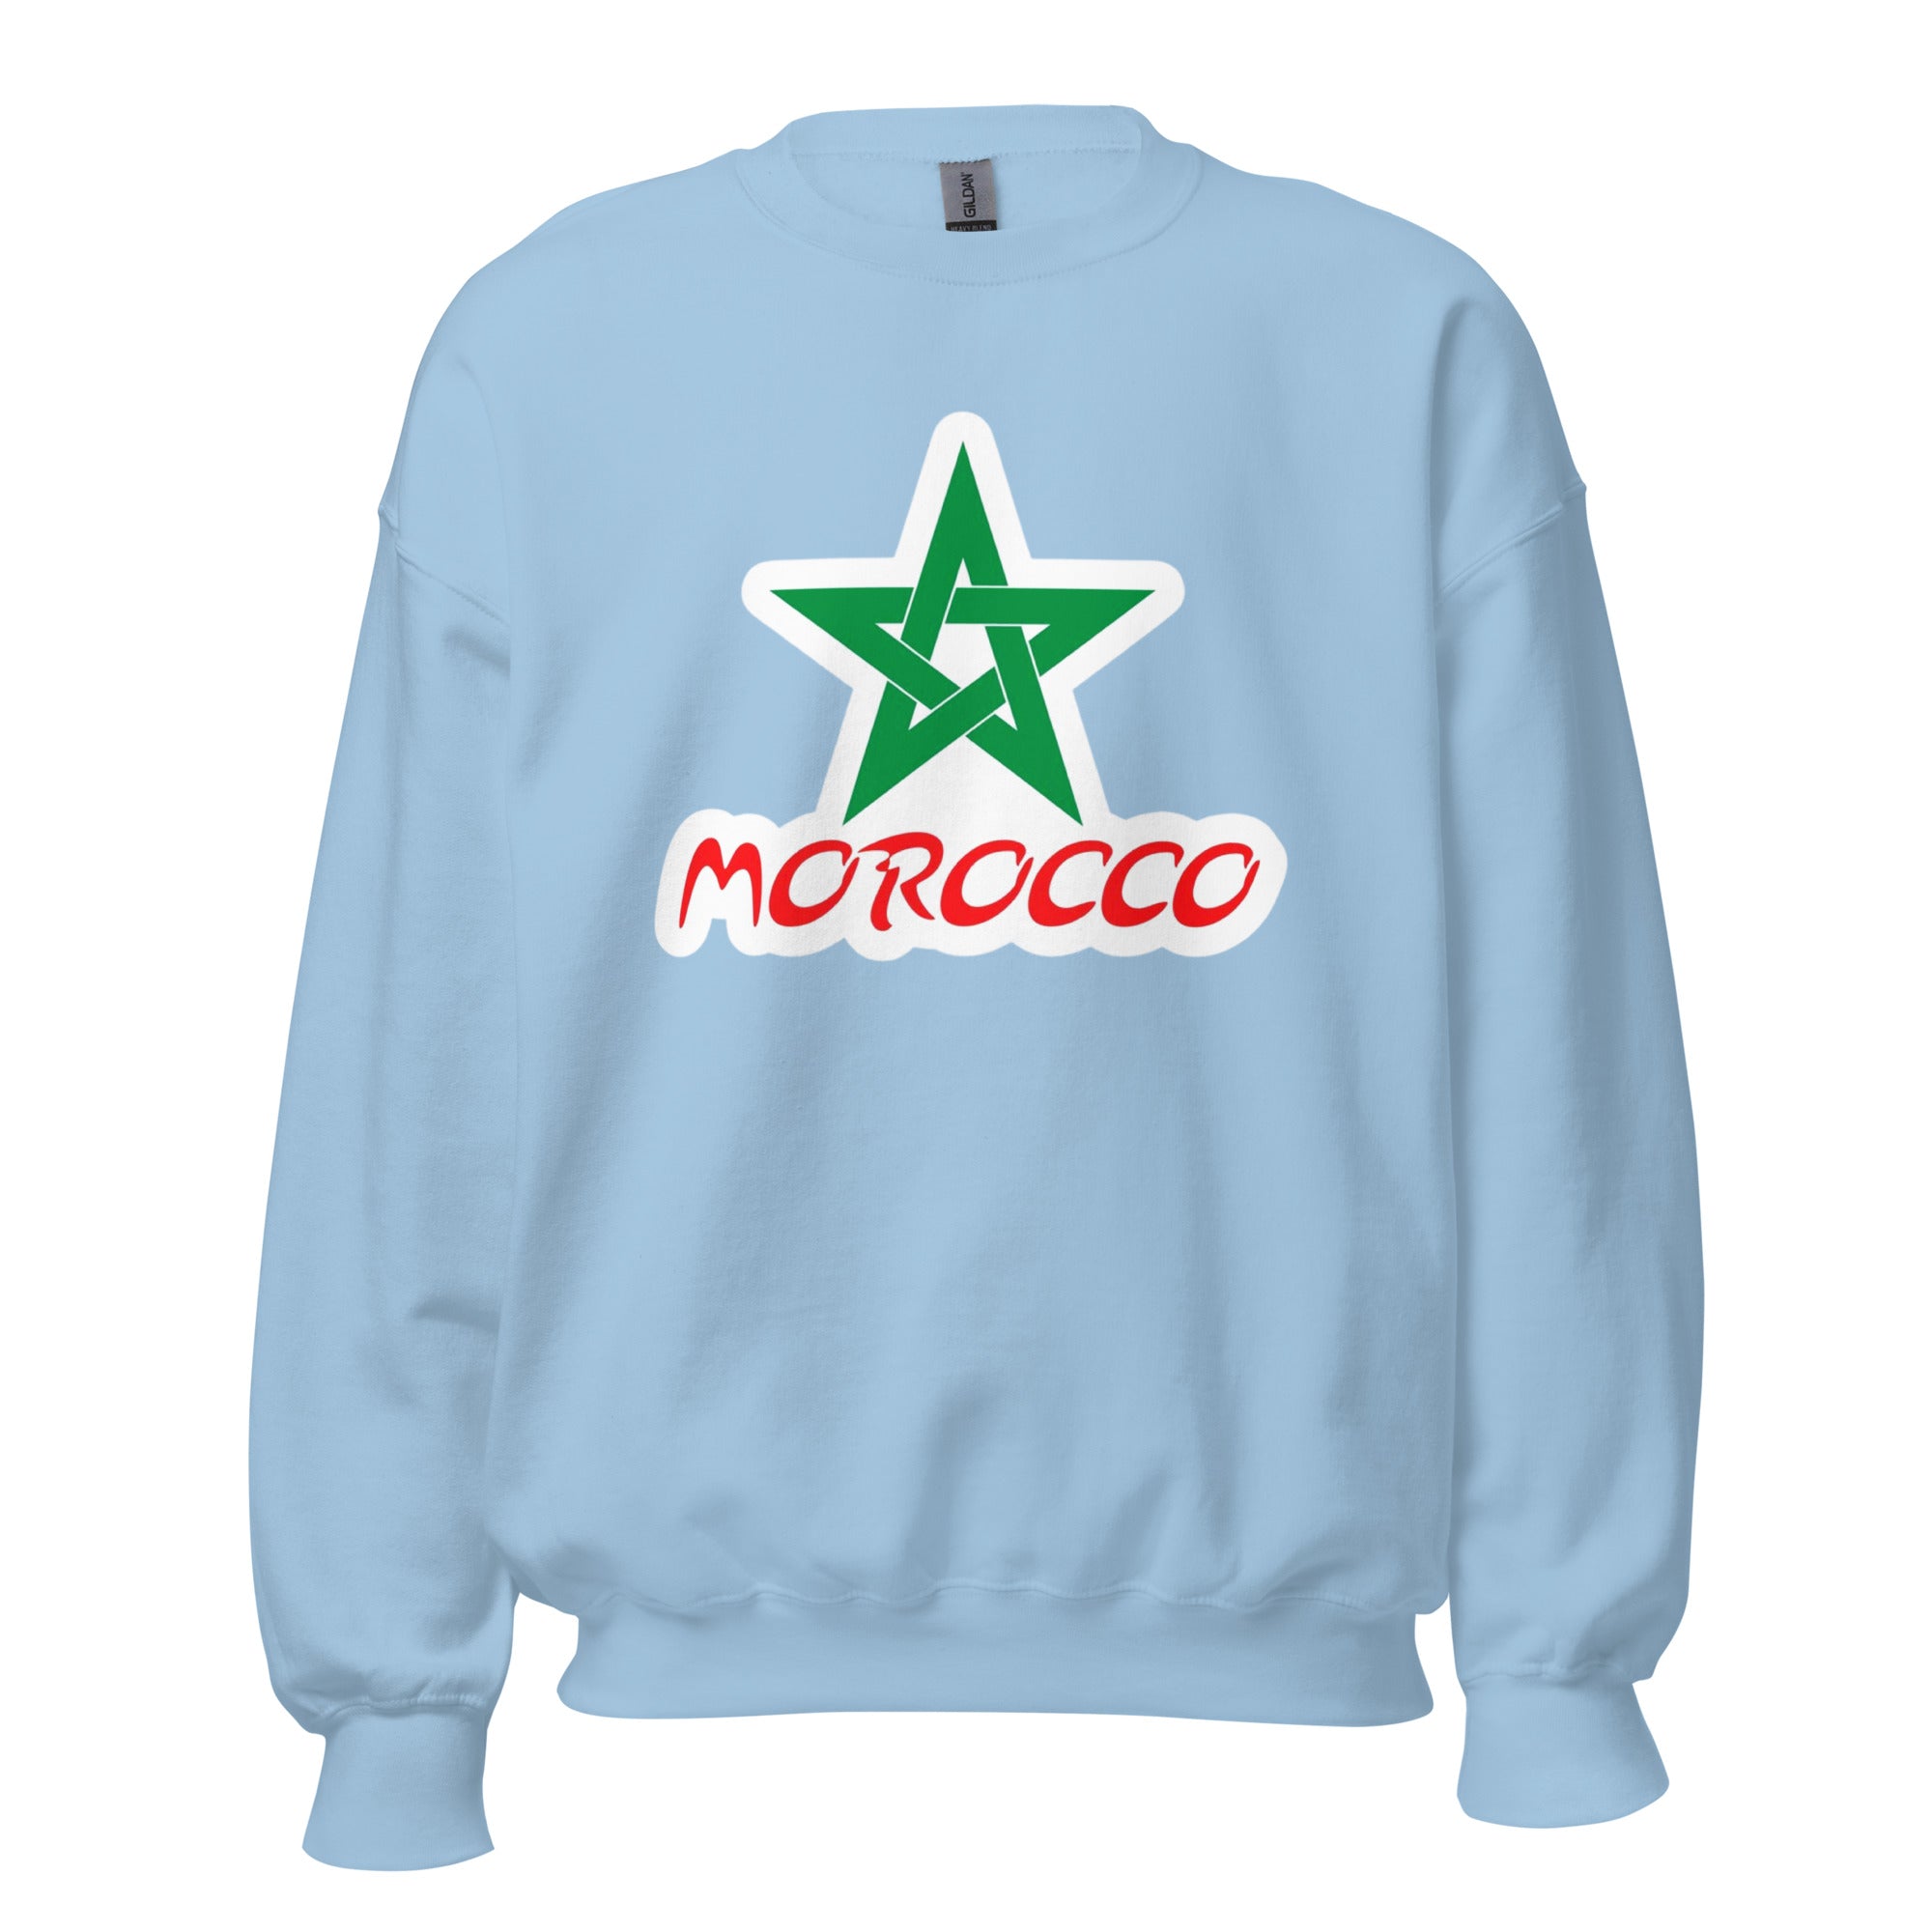 Unisex Crew Neck Sweatshirt - Morocco - GRAPHIC T-SHIRTS